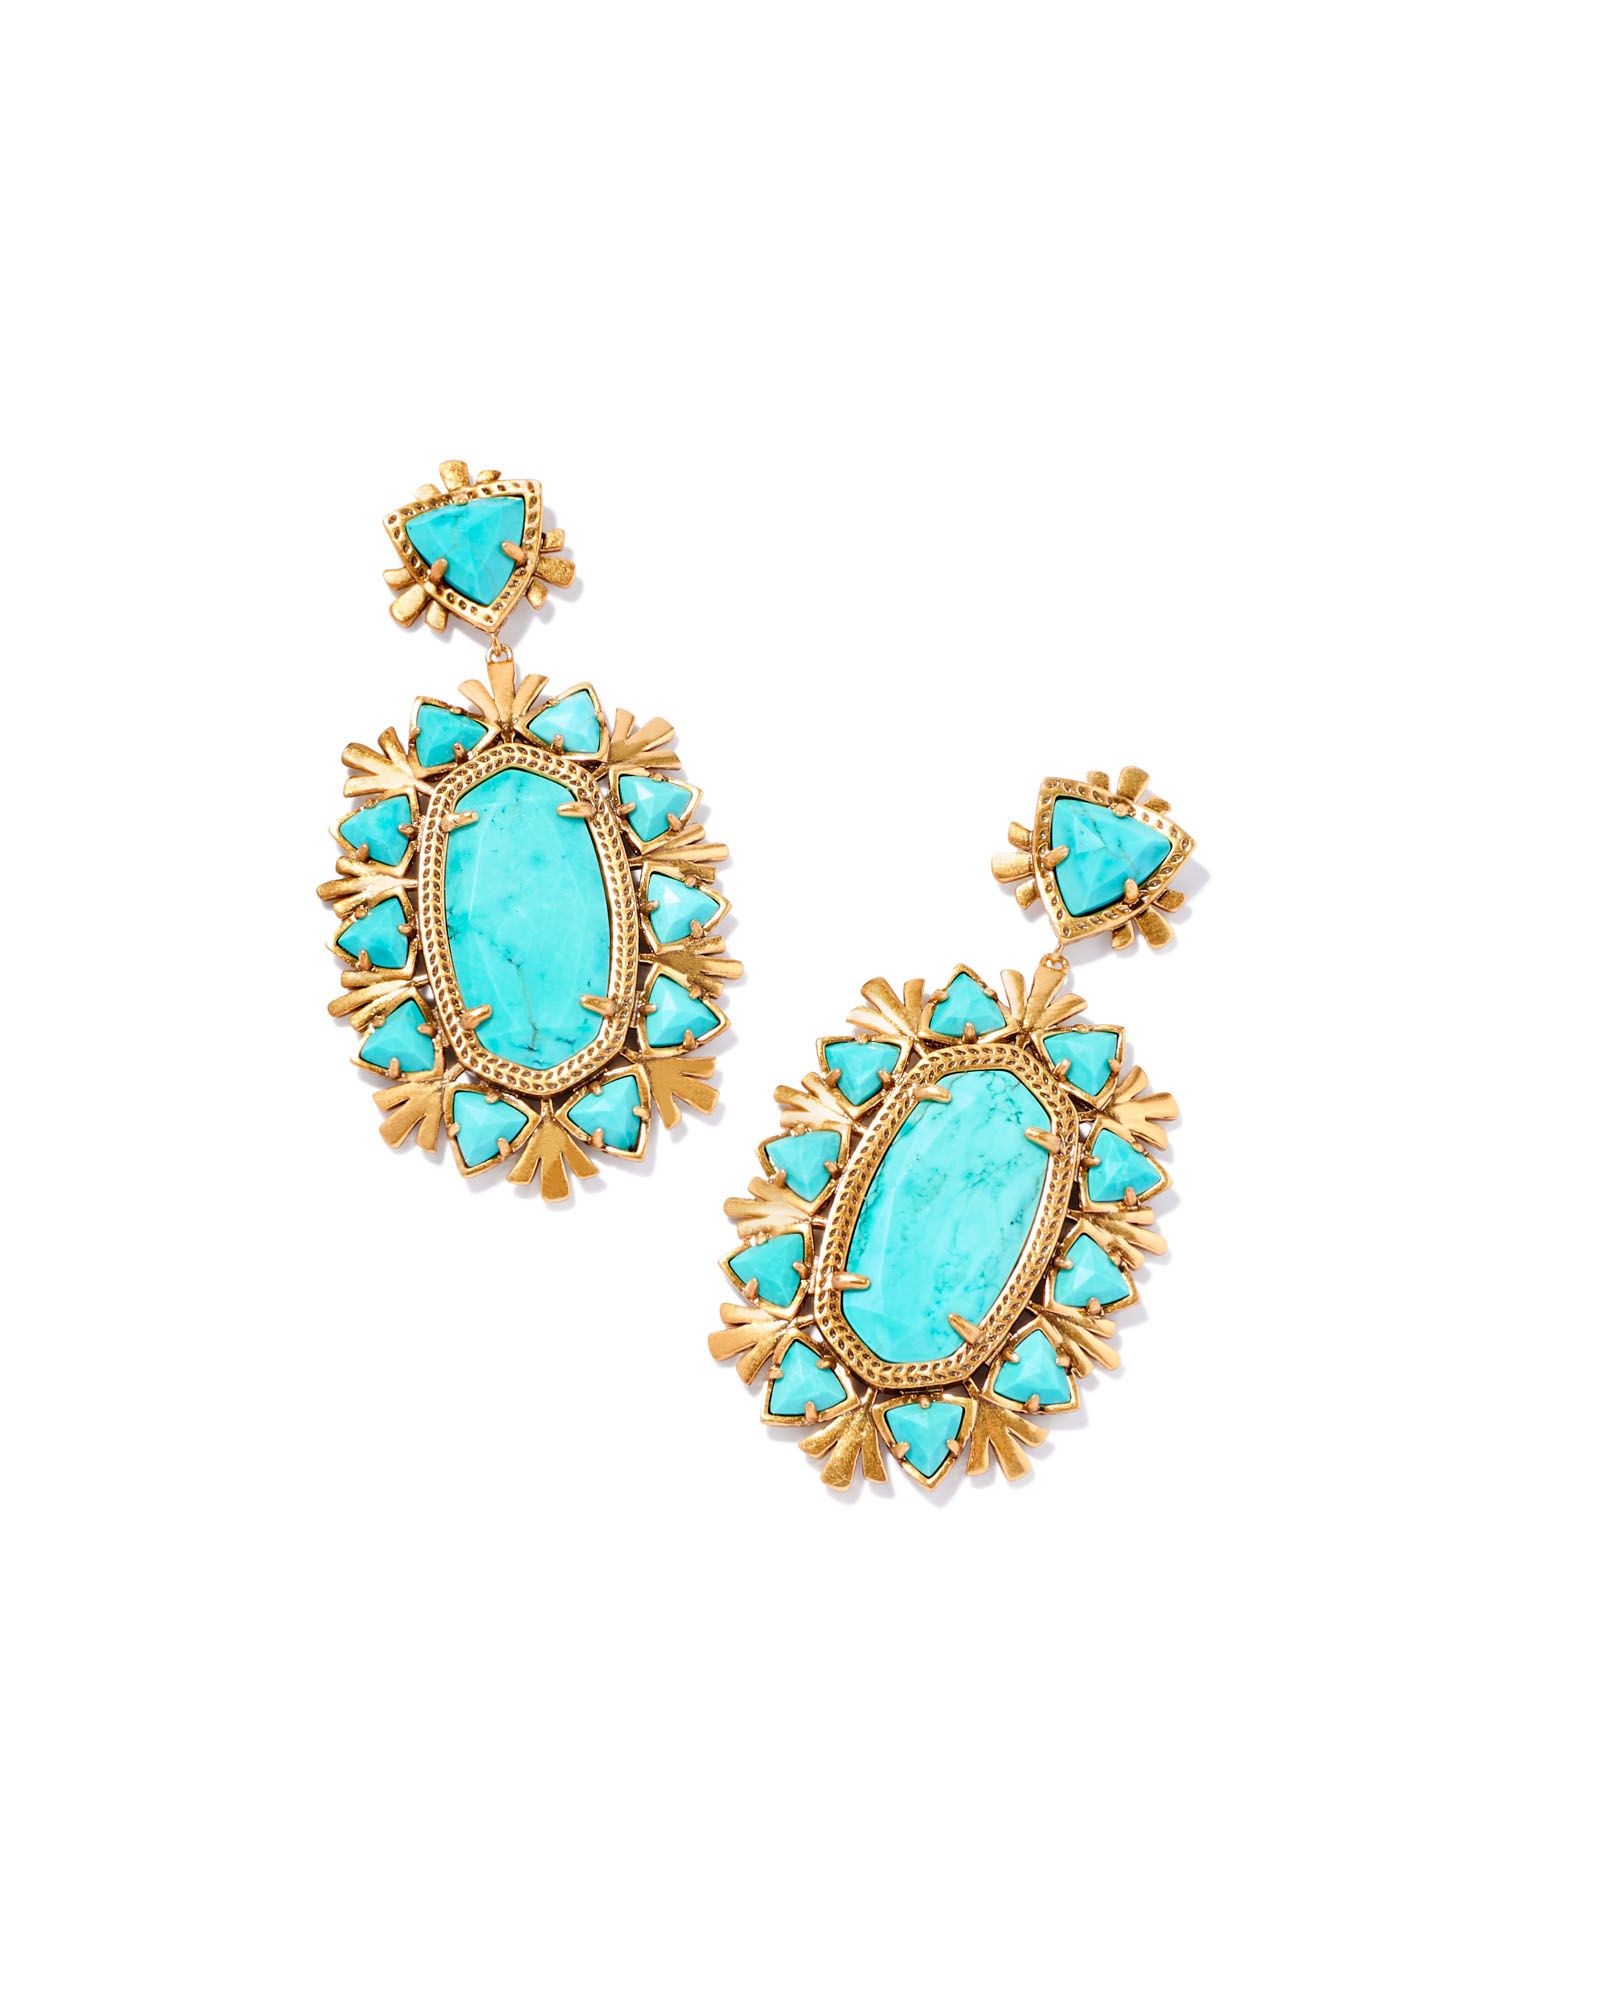 Havana Vintage Gold Statement Earrings in Variegated Turquoise Magnesite | Kendra Scott | Kendra Scott